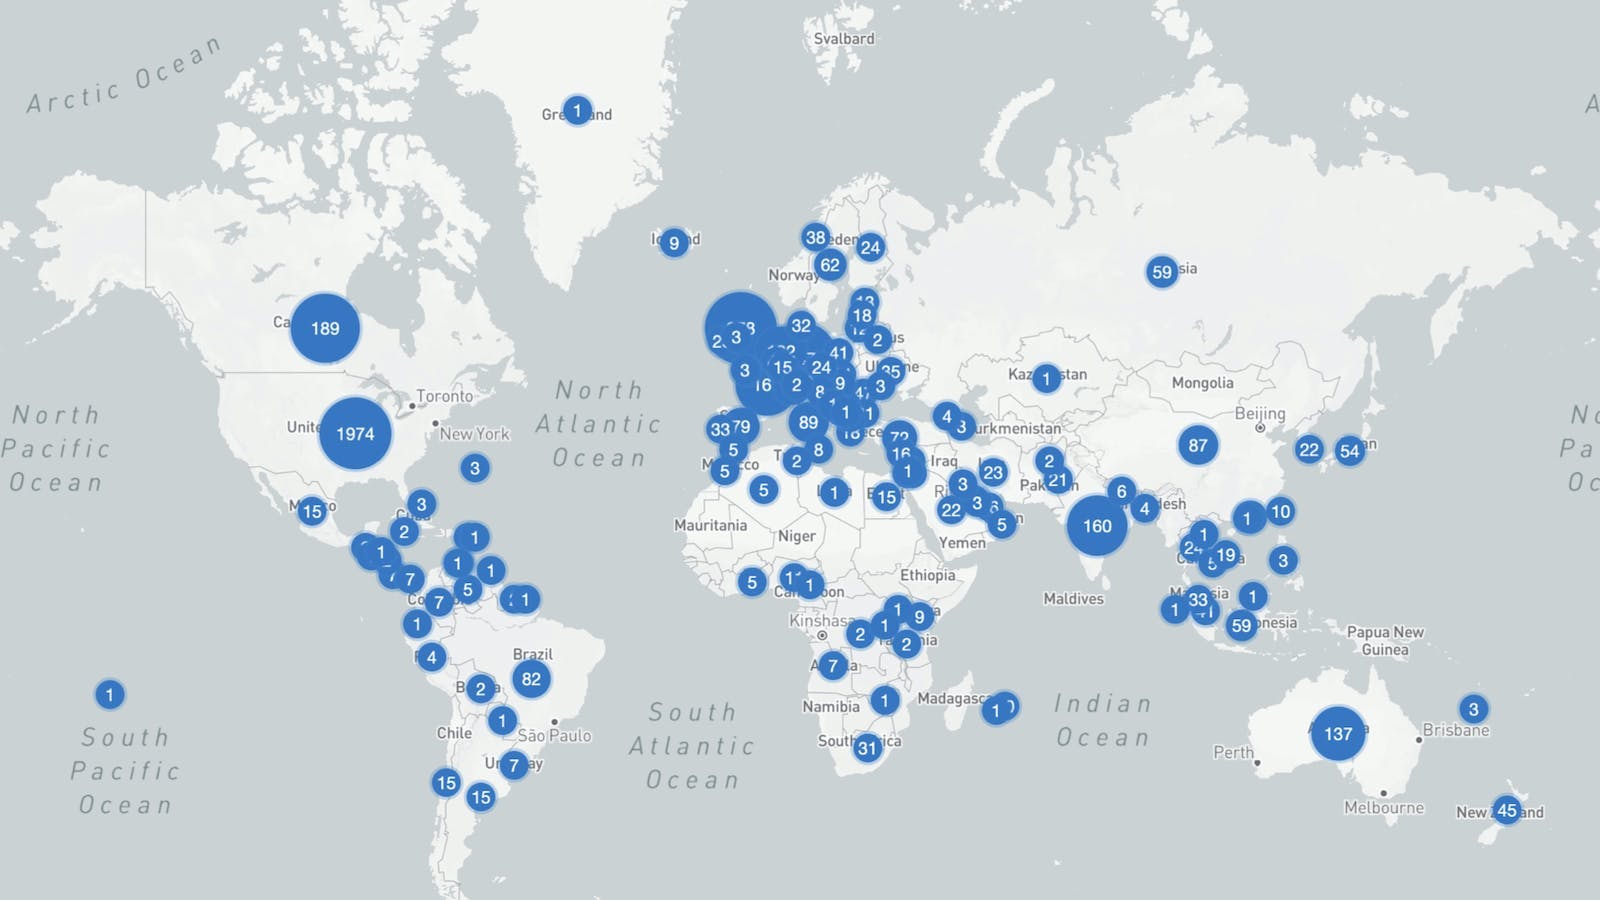 Figure 2: A map of key data centers around the world (Source: datacentermap.com)